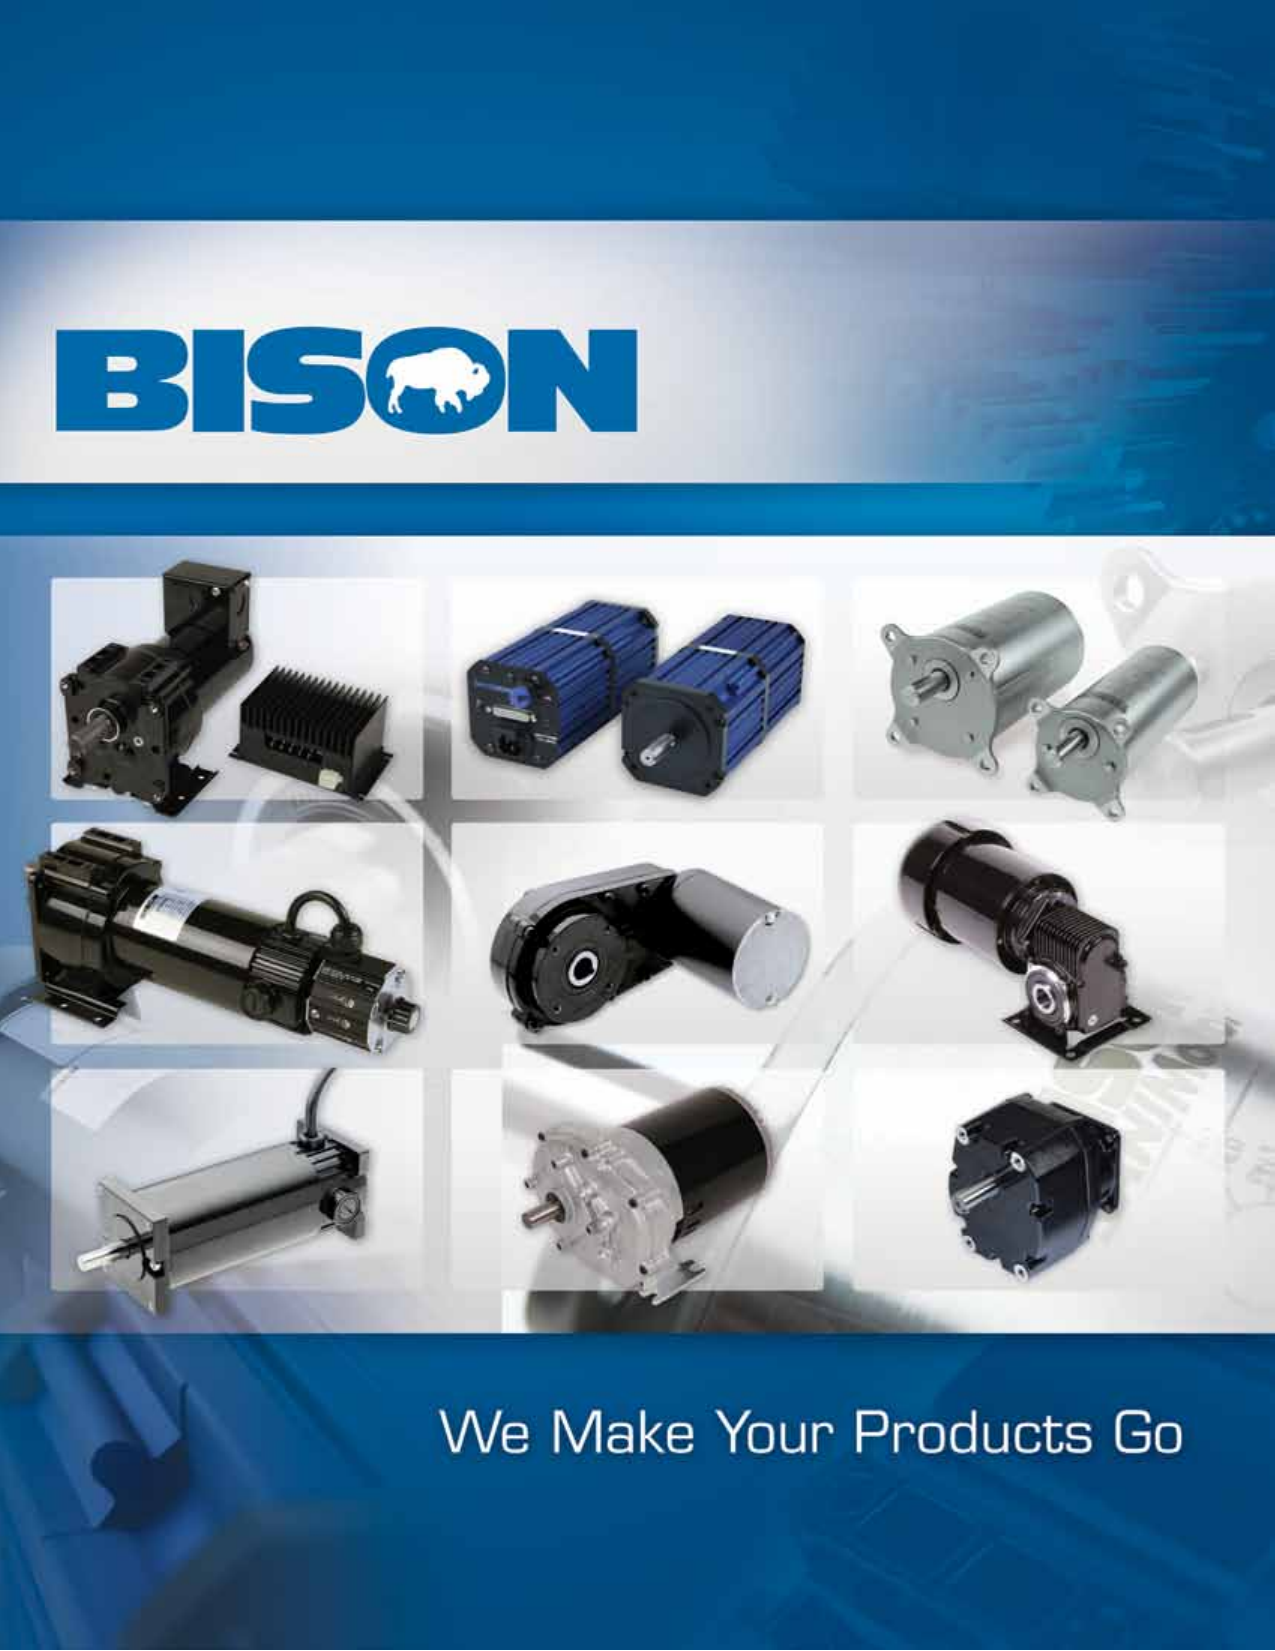 Bison 1/15 Agitator Gear AC Gearmotor Motor 115v 402:1 016-562-0405 152-D05-7006 